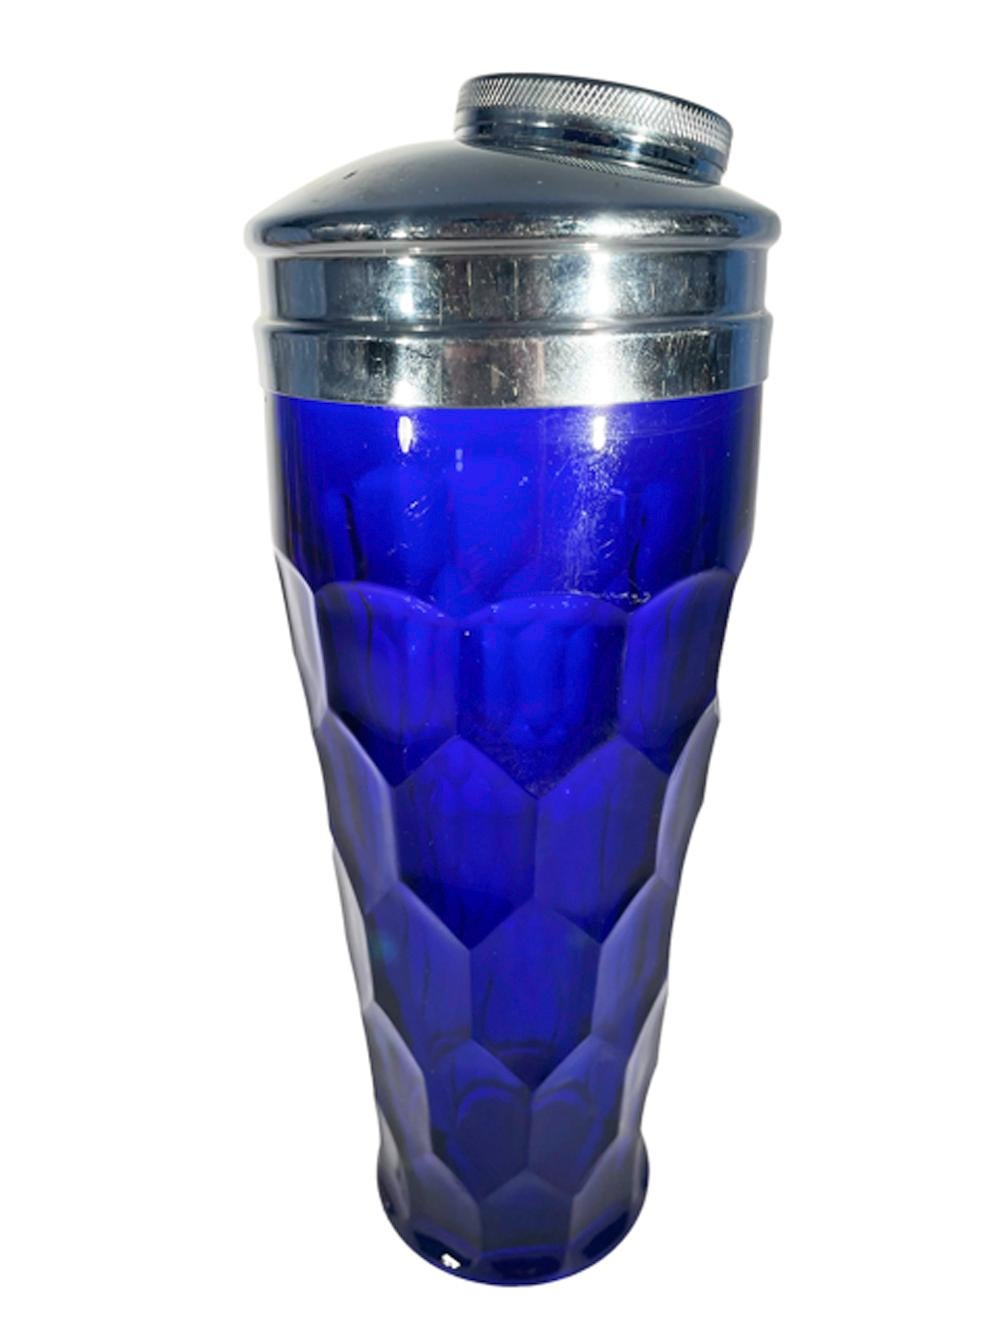 Art Deco Cobalt Blue Shaker by Paden City Glass in the 